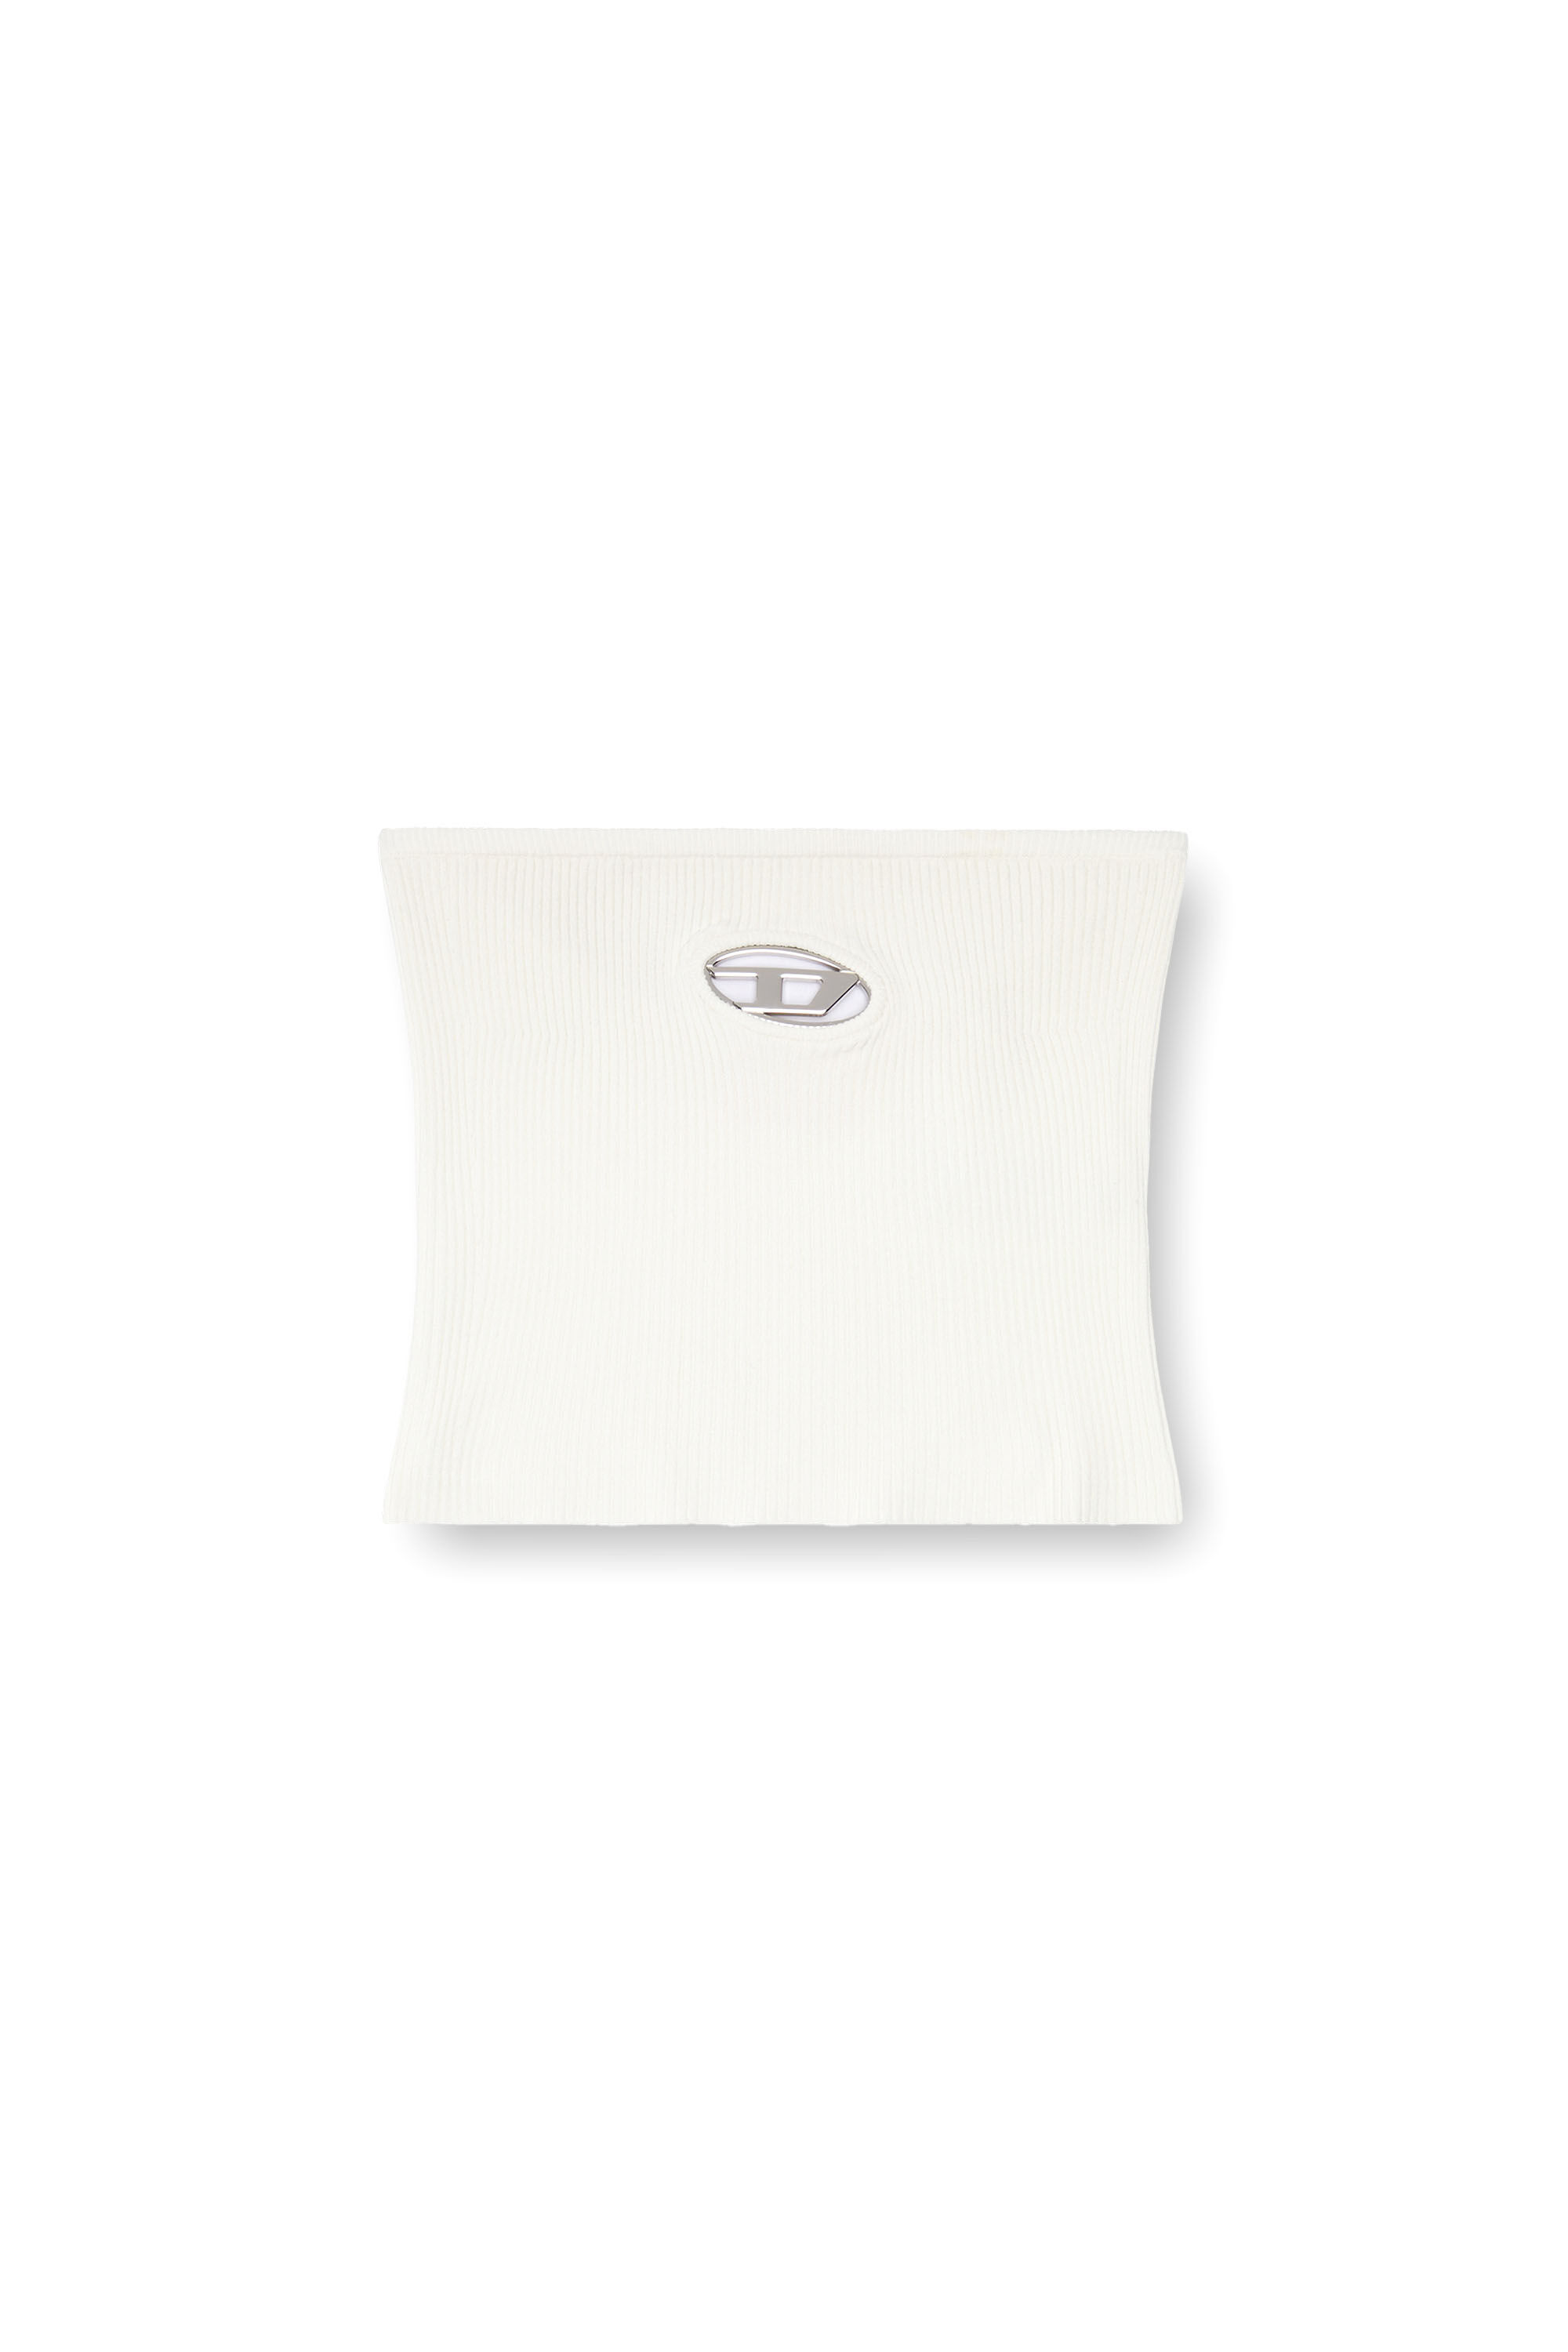 Diesel - M-CLARKSVILLEX, Donna Top a fascia con logo in metallo in Bianco - Image 2